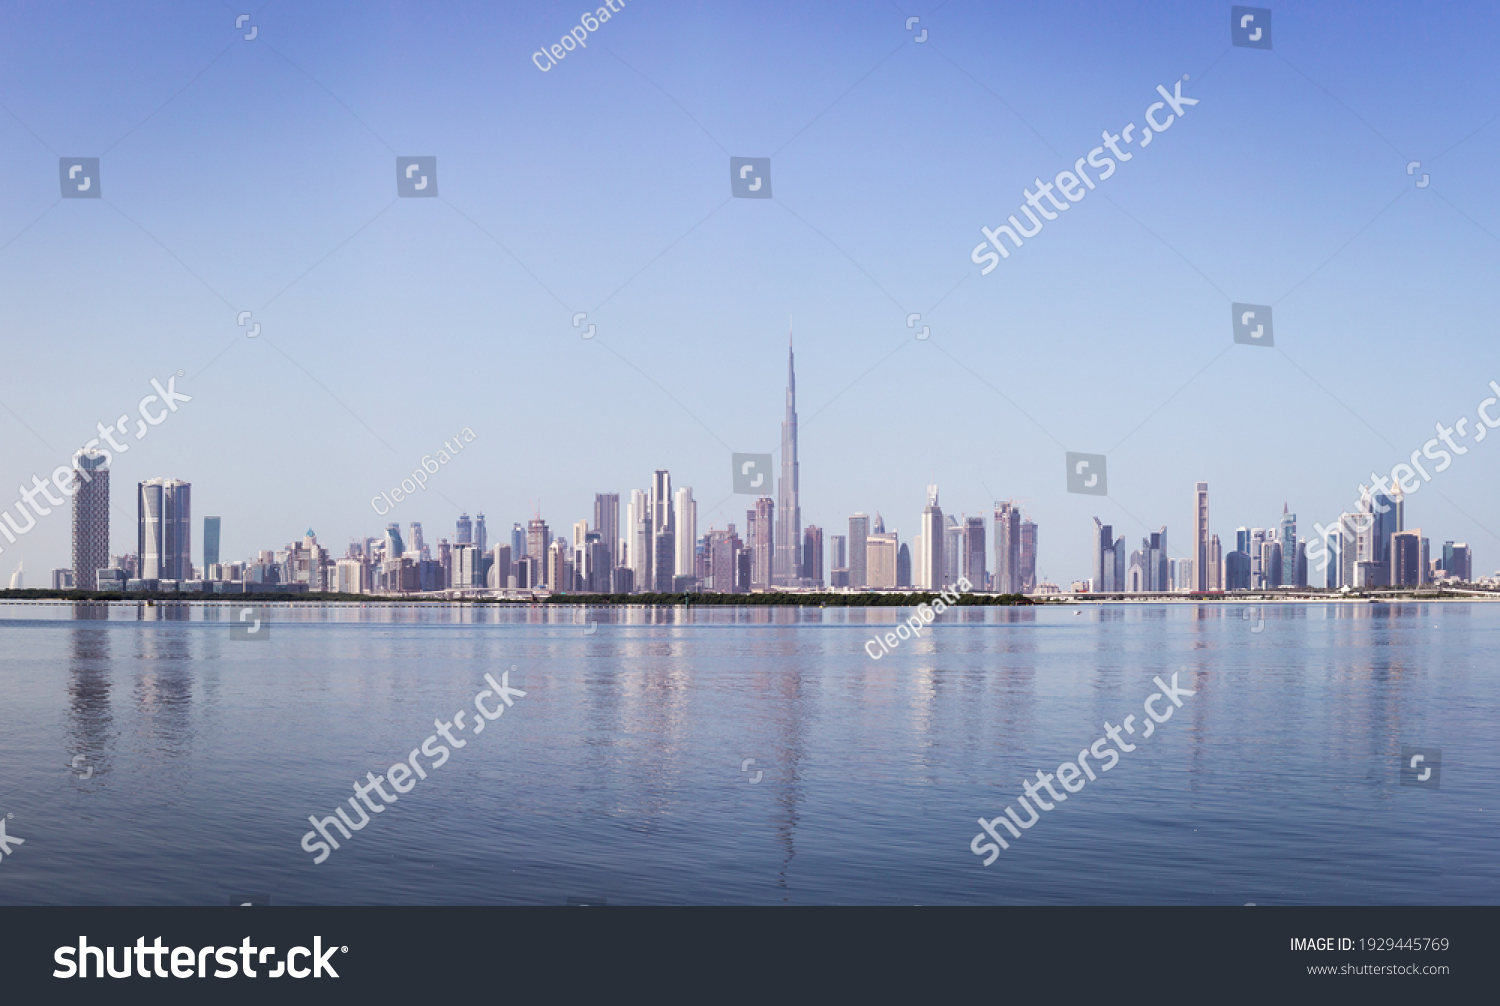 Dubai Downtown skyline panorama with reflections in Dubai Creek, cold colors, seen from Dubai Creek Harbour promenade. #1929445769